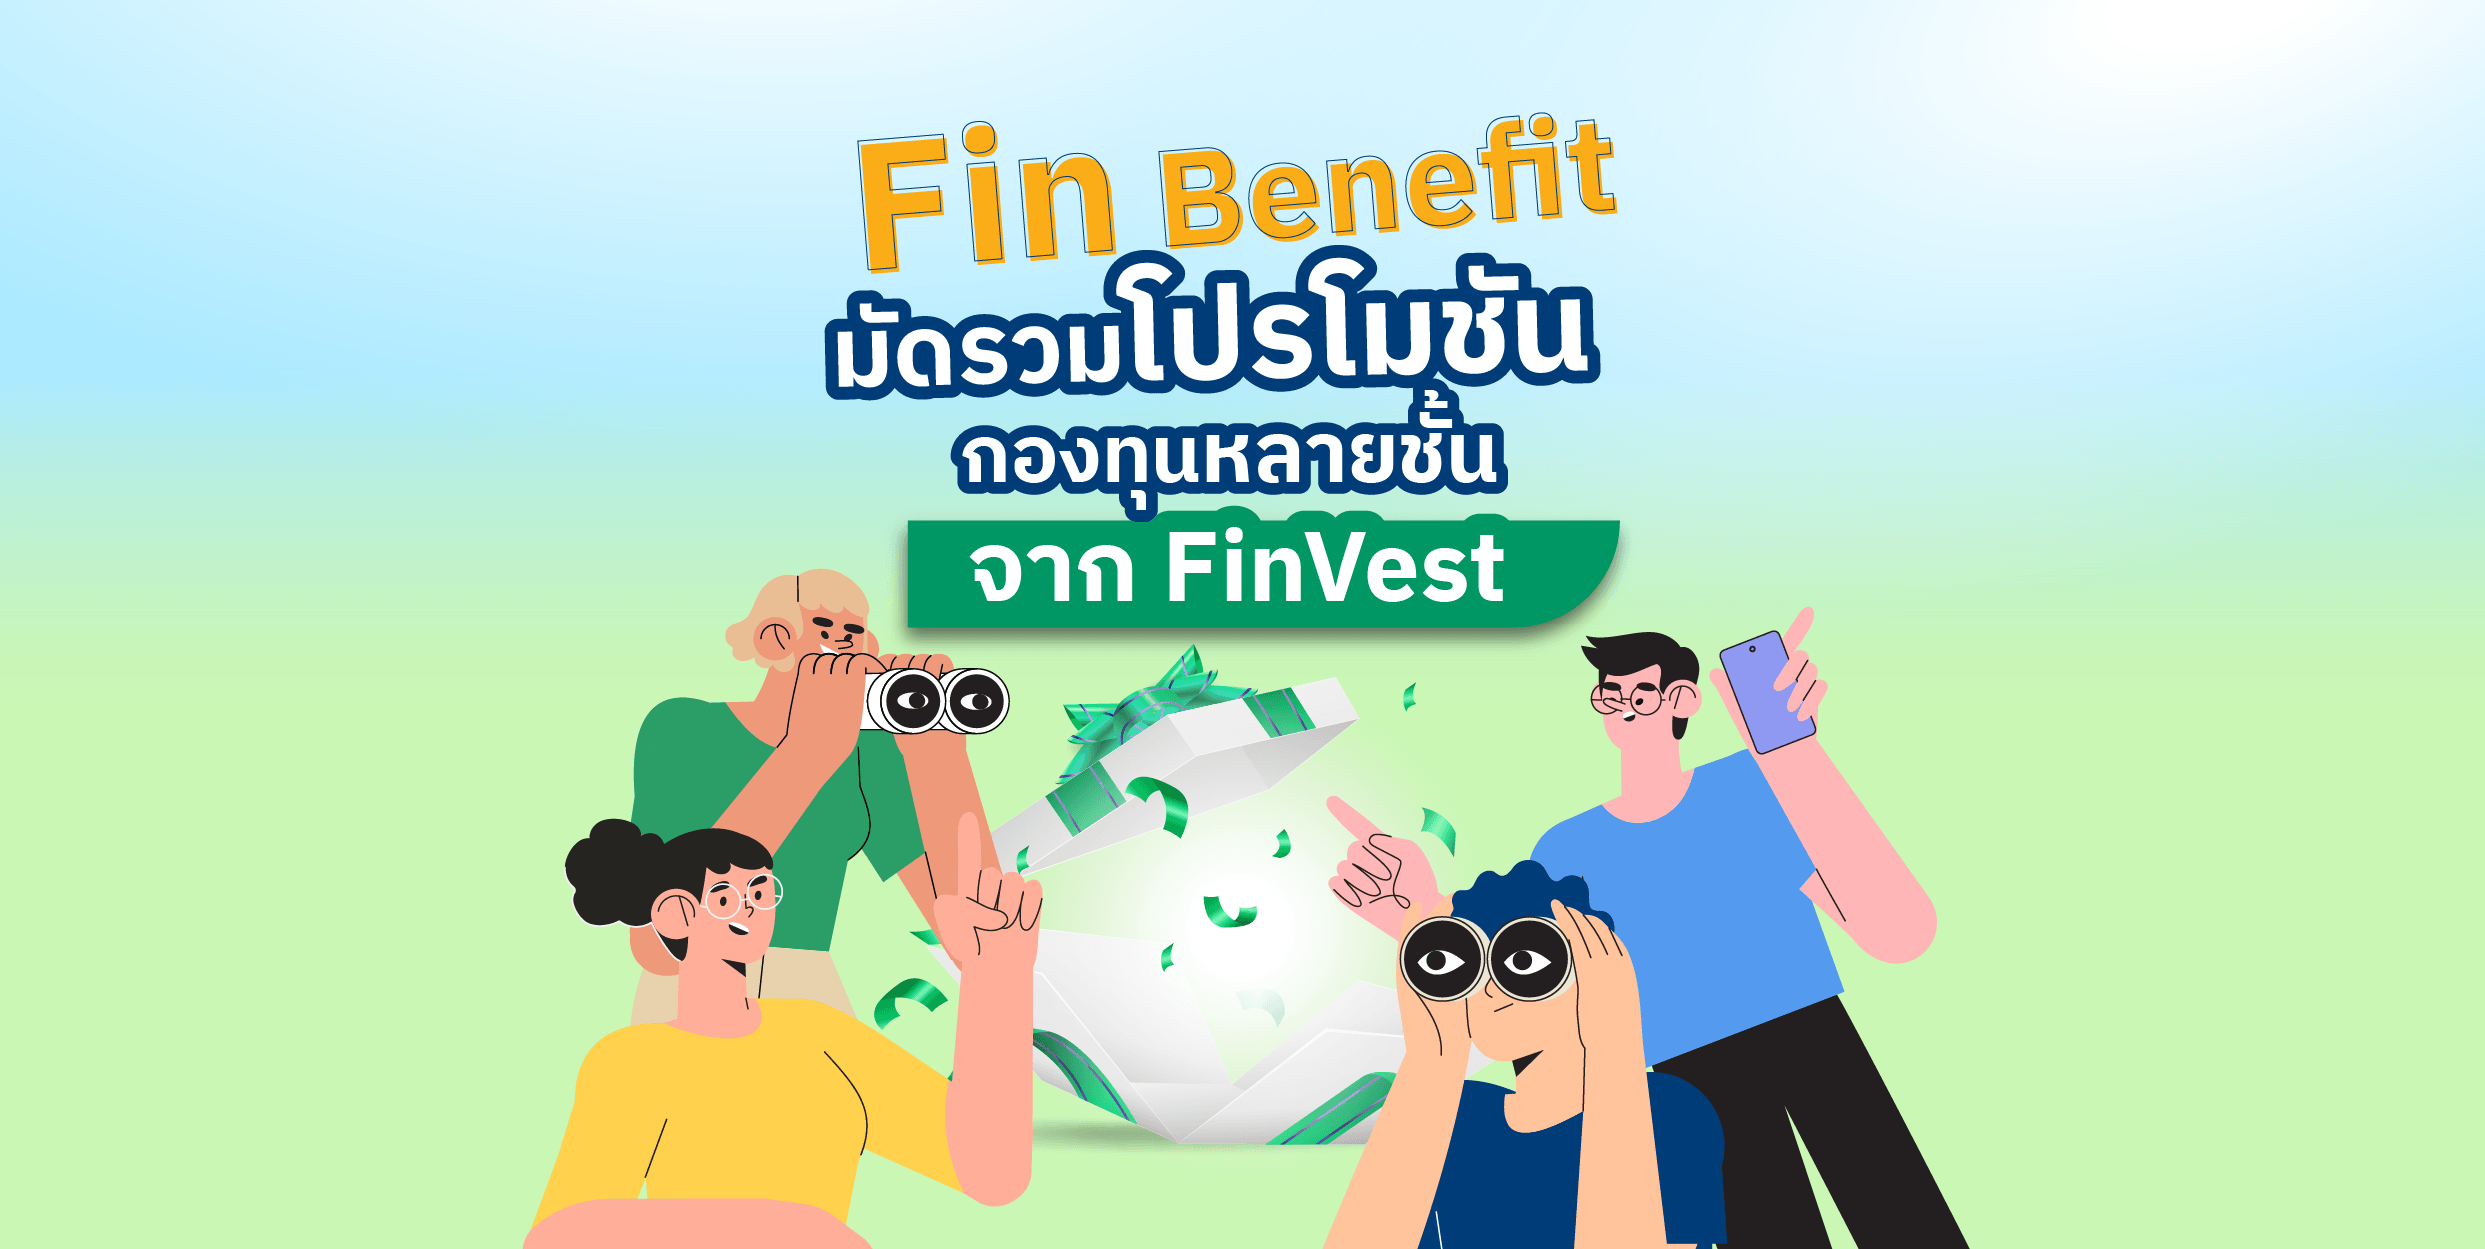 Fin Benefit | มัดรวมโปรโมชันกองทุน จาก FinVest